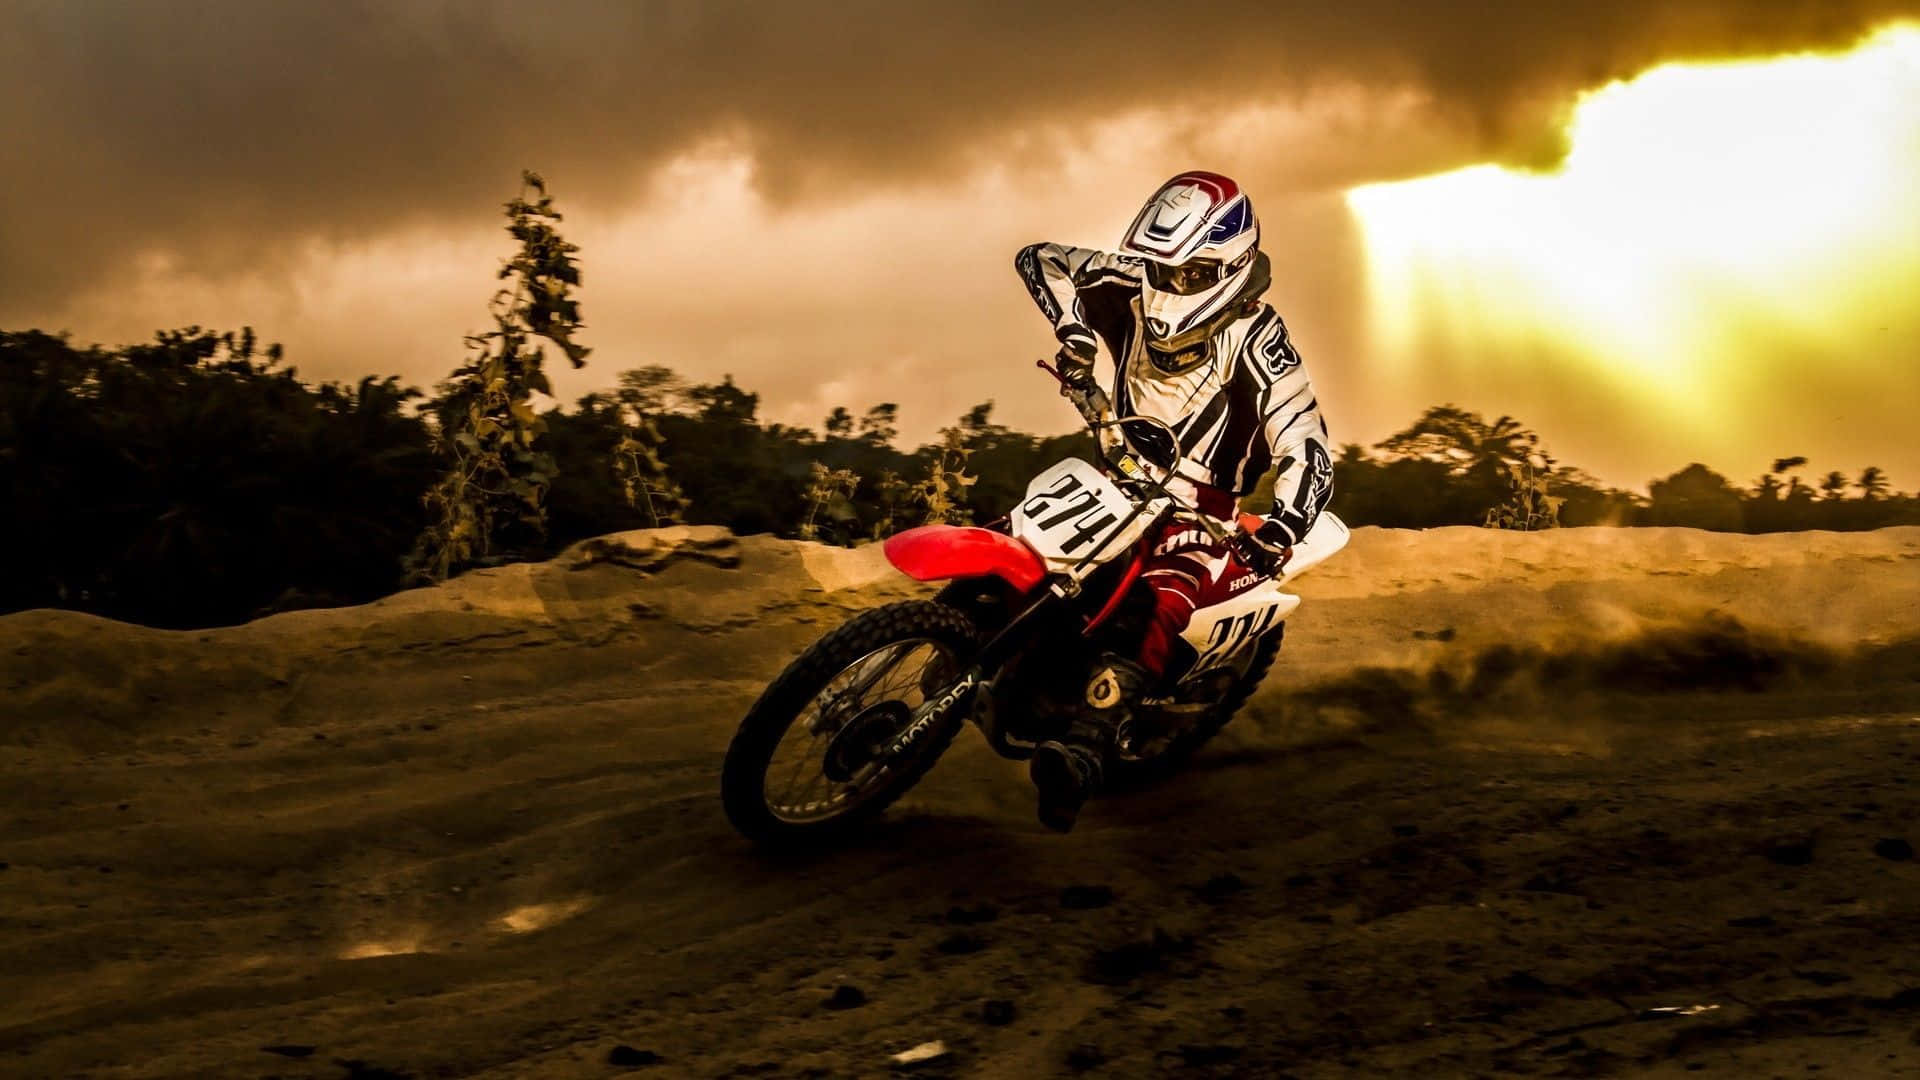 Ride Into Adventure with a Honda Dirt Bike Wallpaper